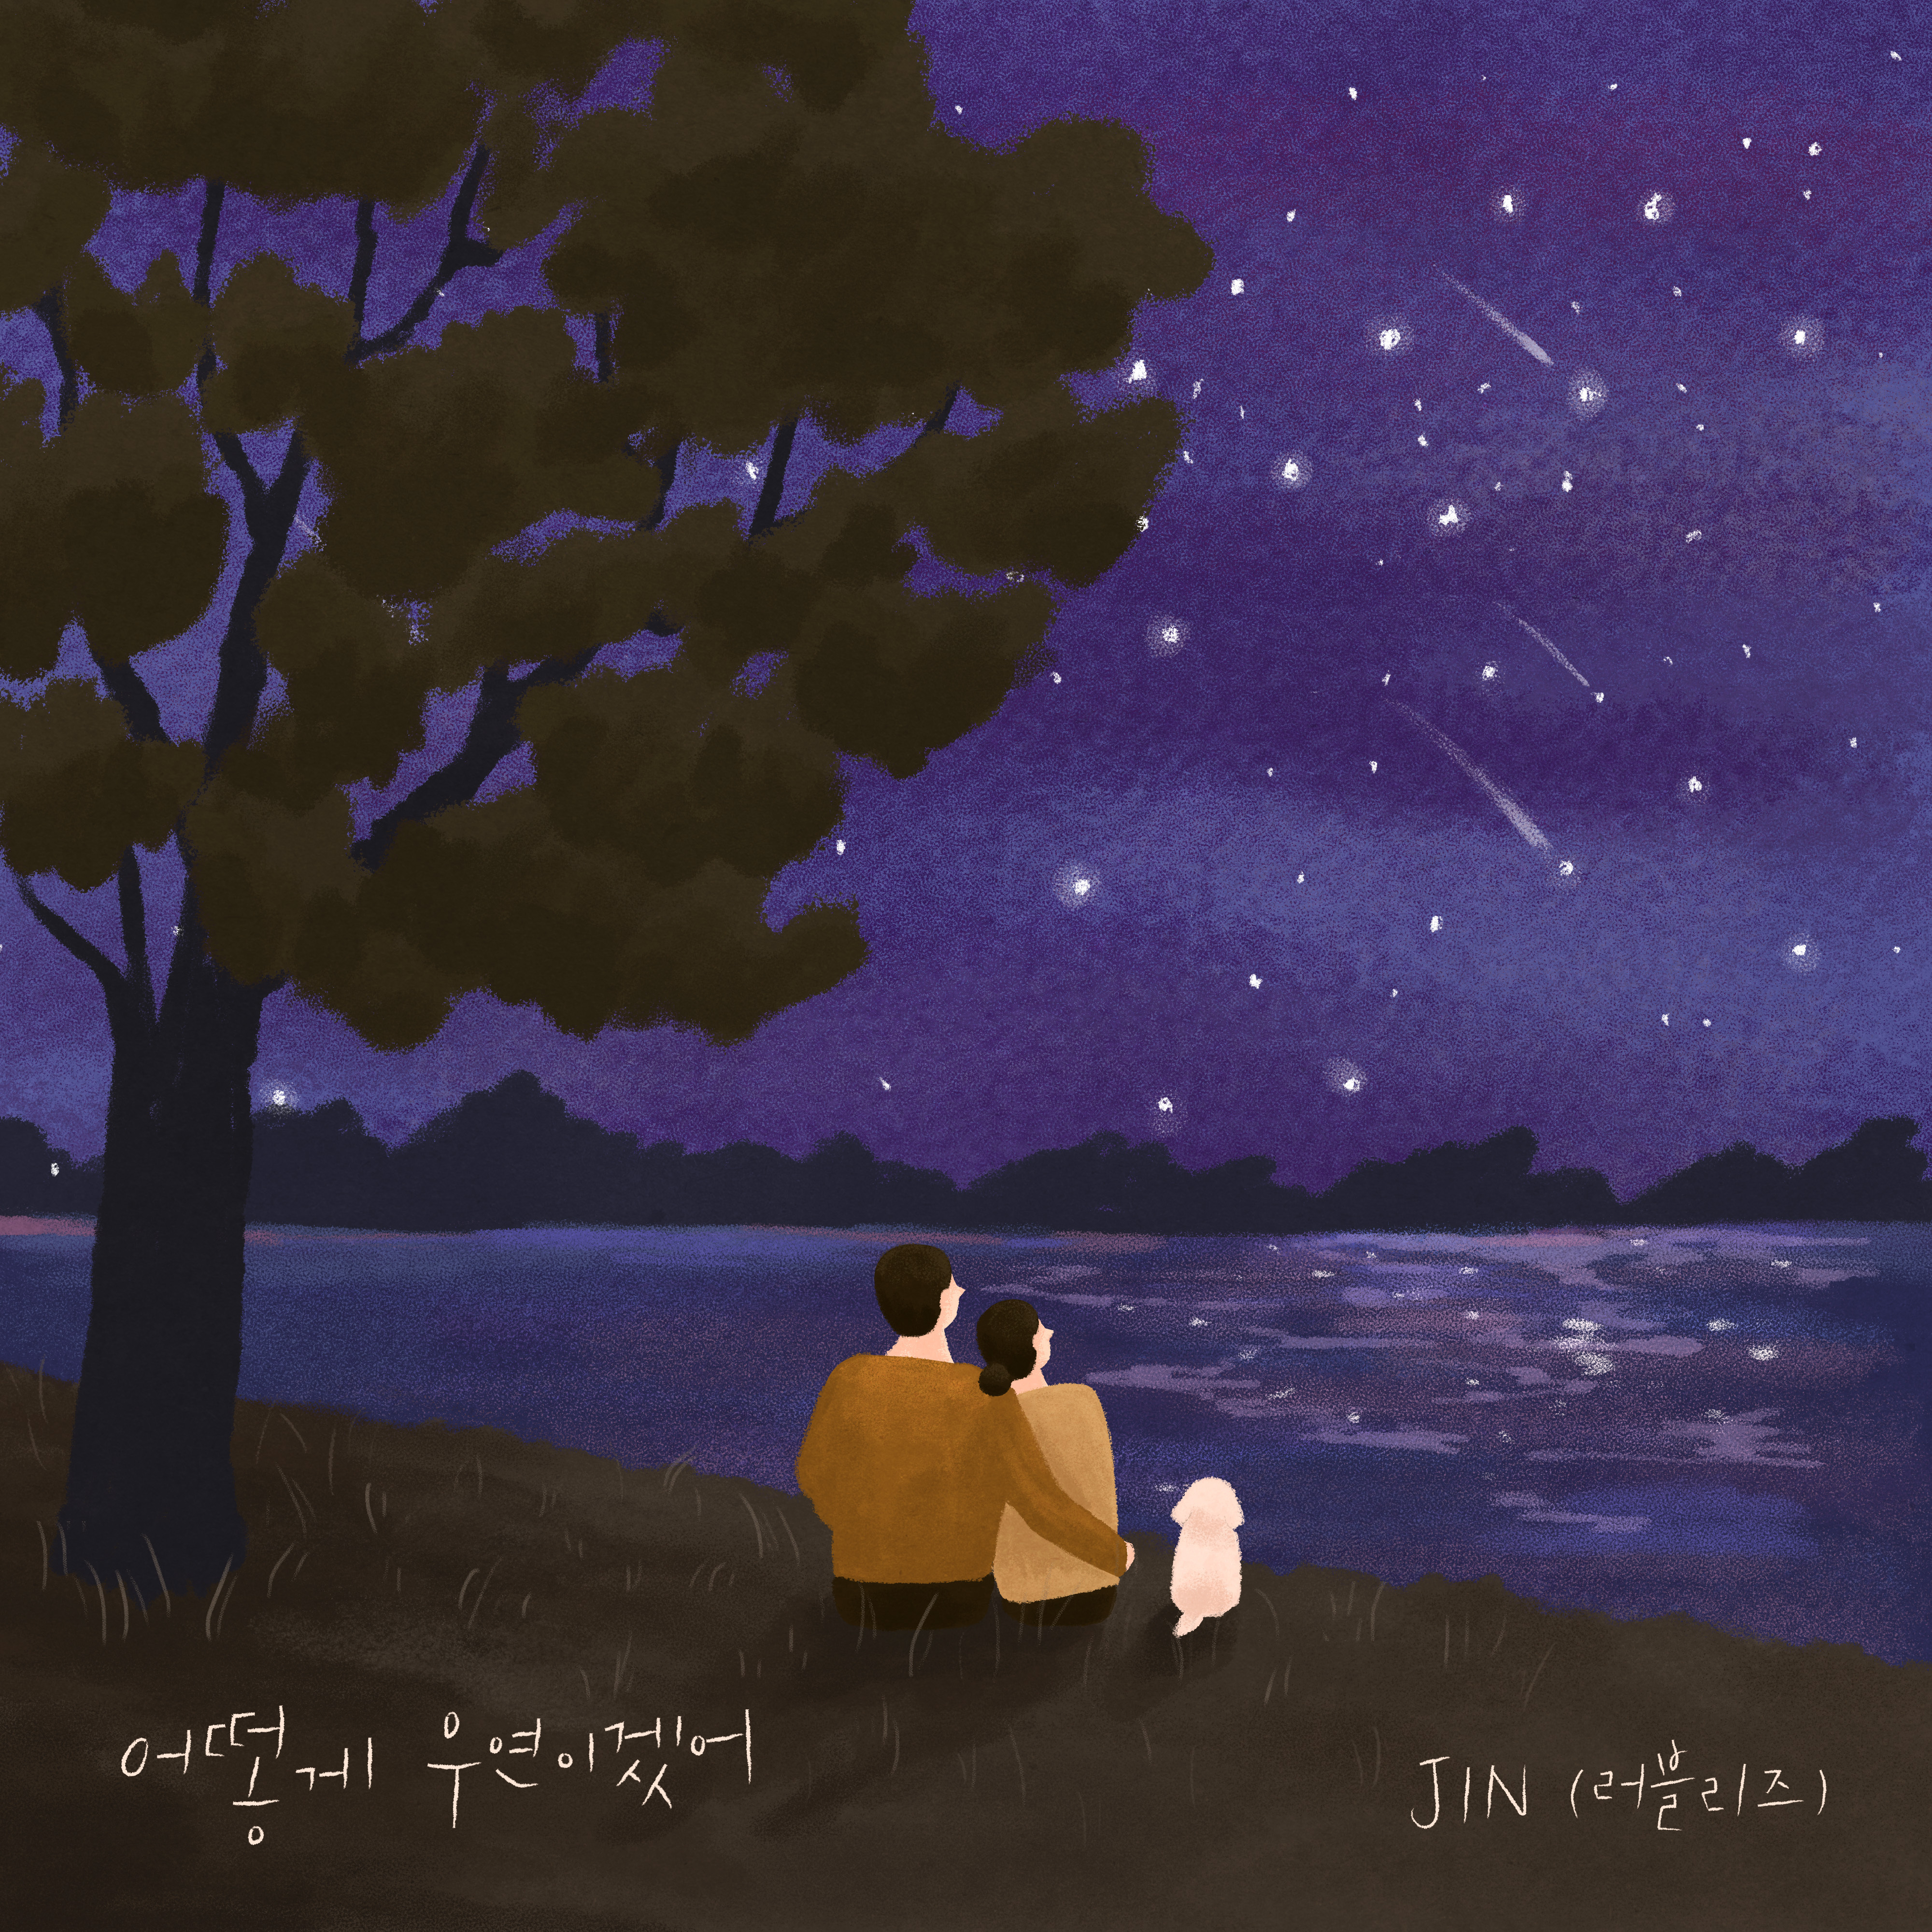 [影音] JIN (Lovelyz) - Not a coincidence 